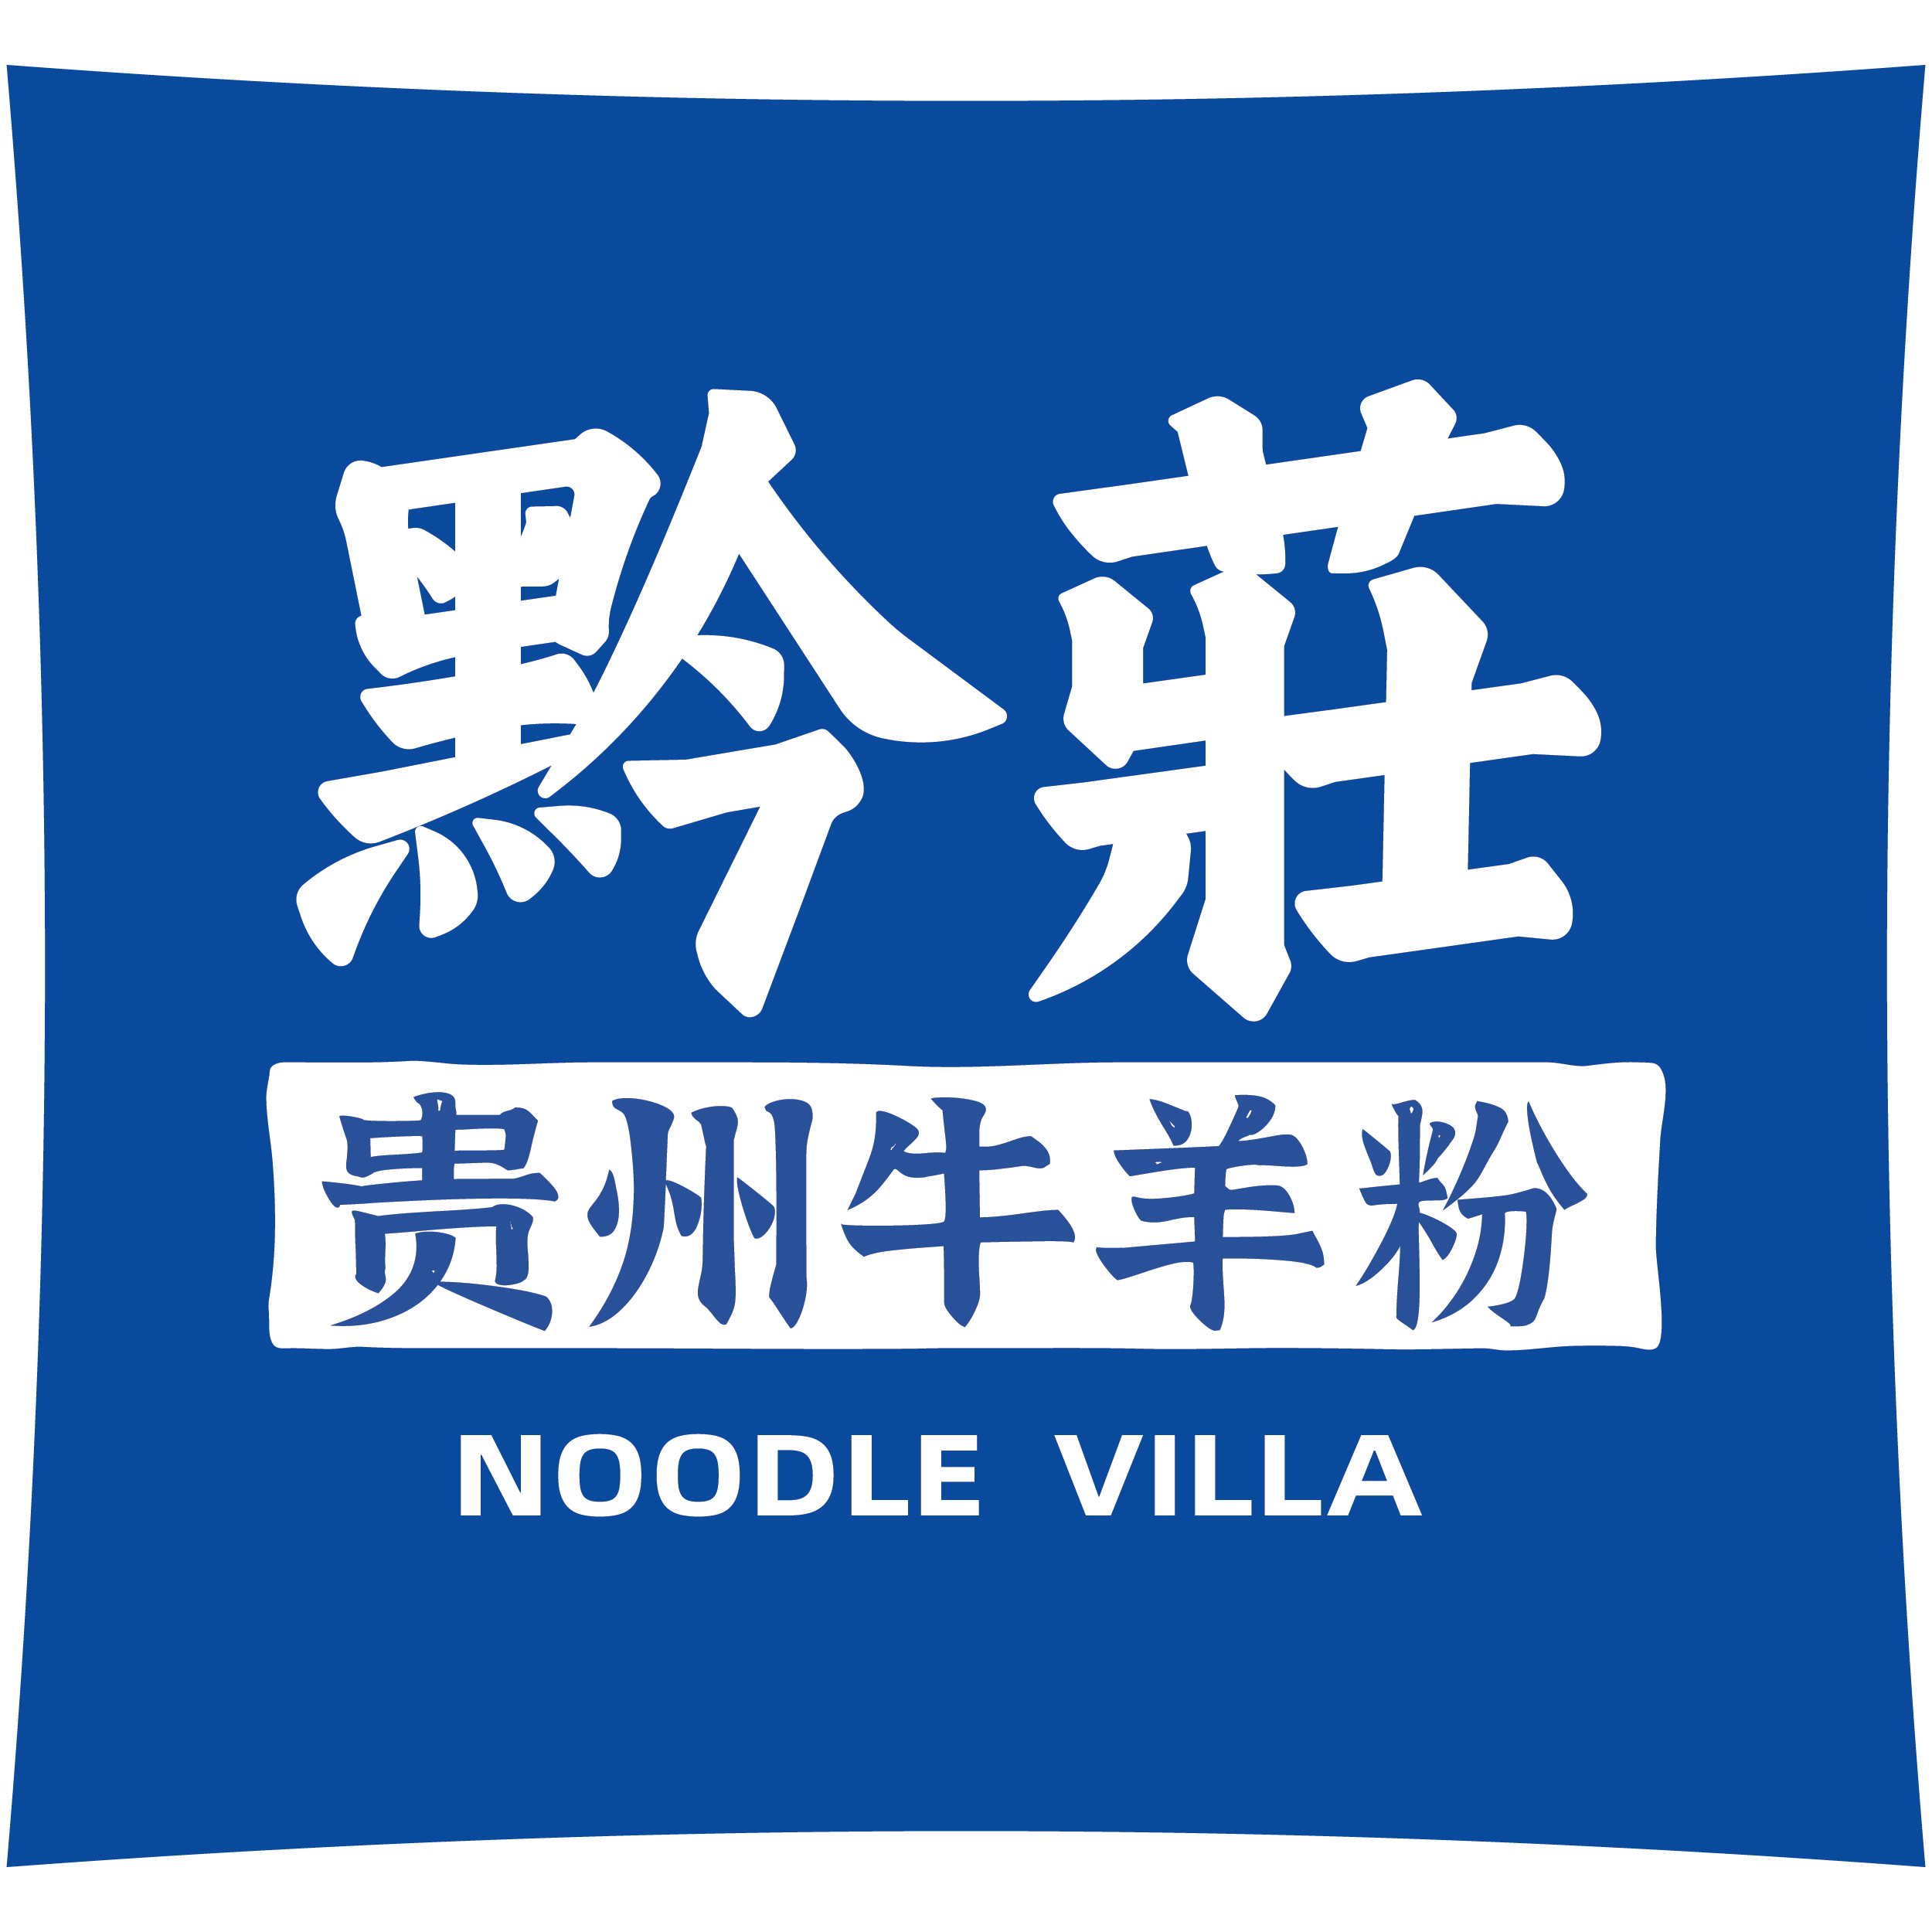 Noodle Villa logo 2500px.jpg